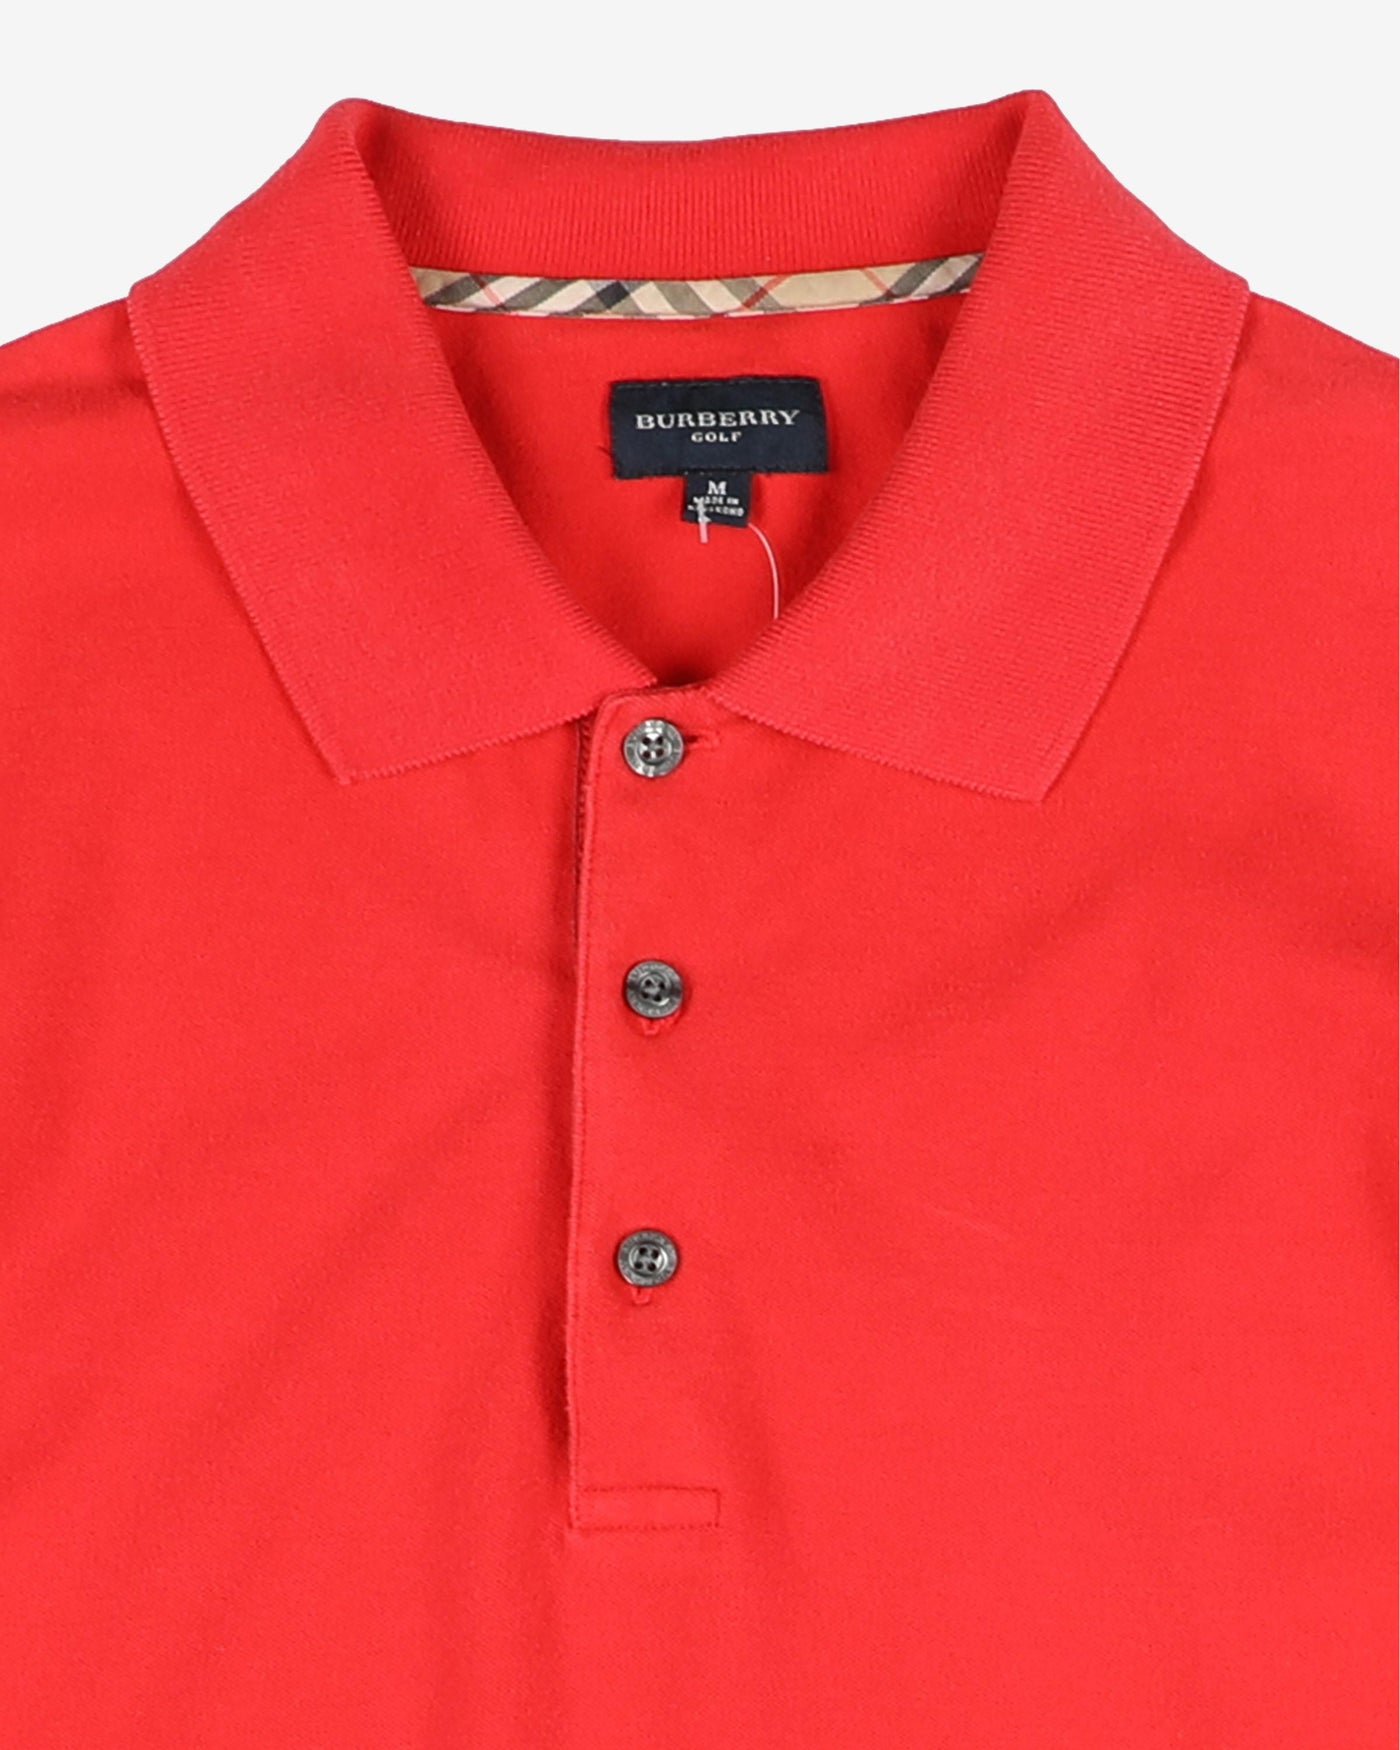 Burberry Golf Red Polo Shirt - M – Rokit